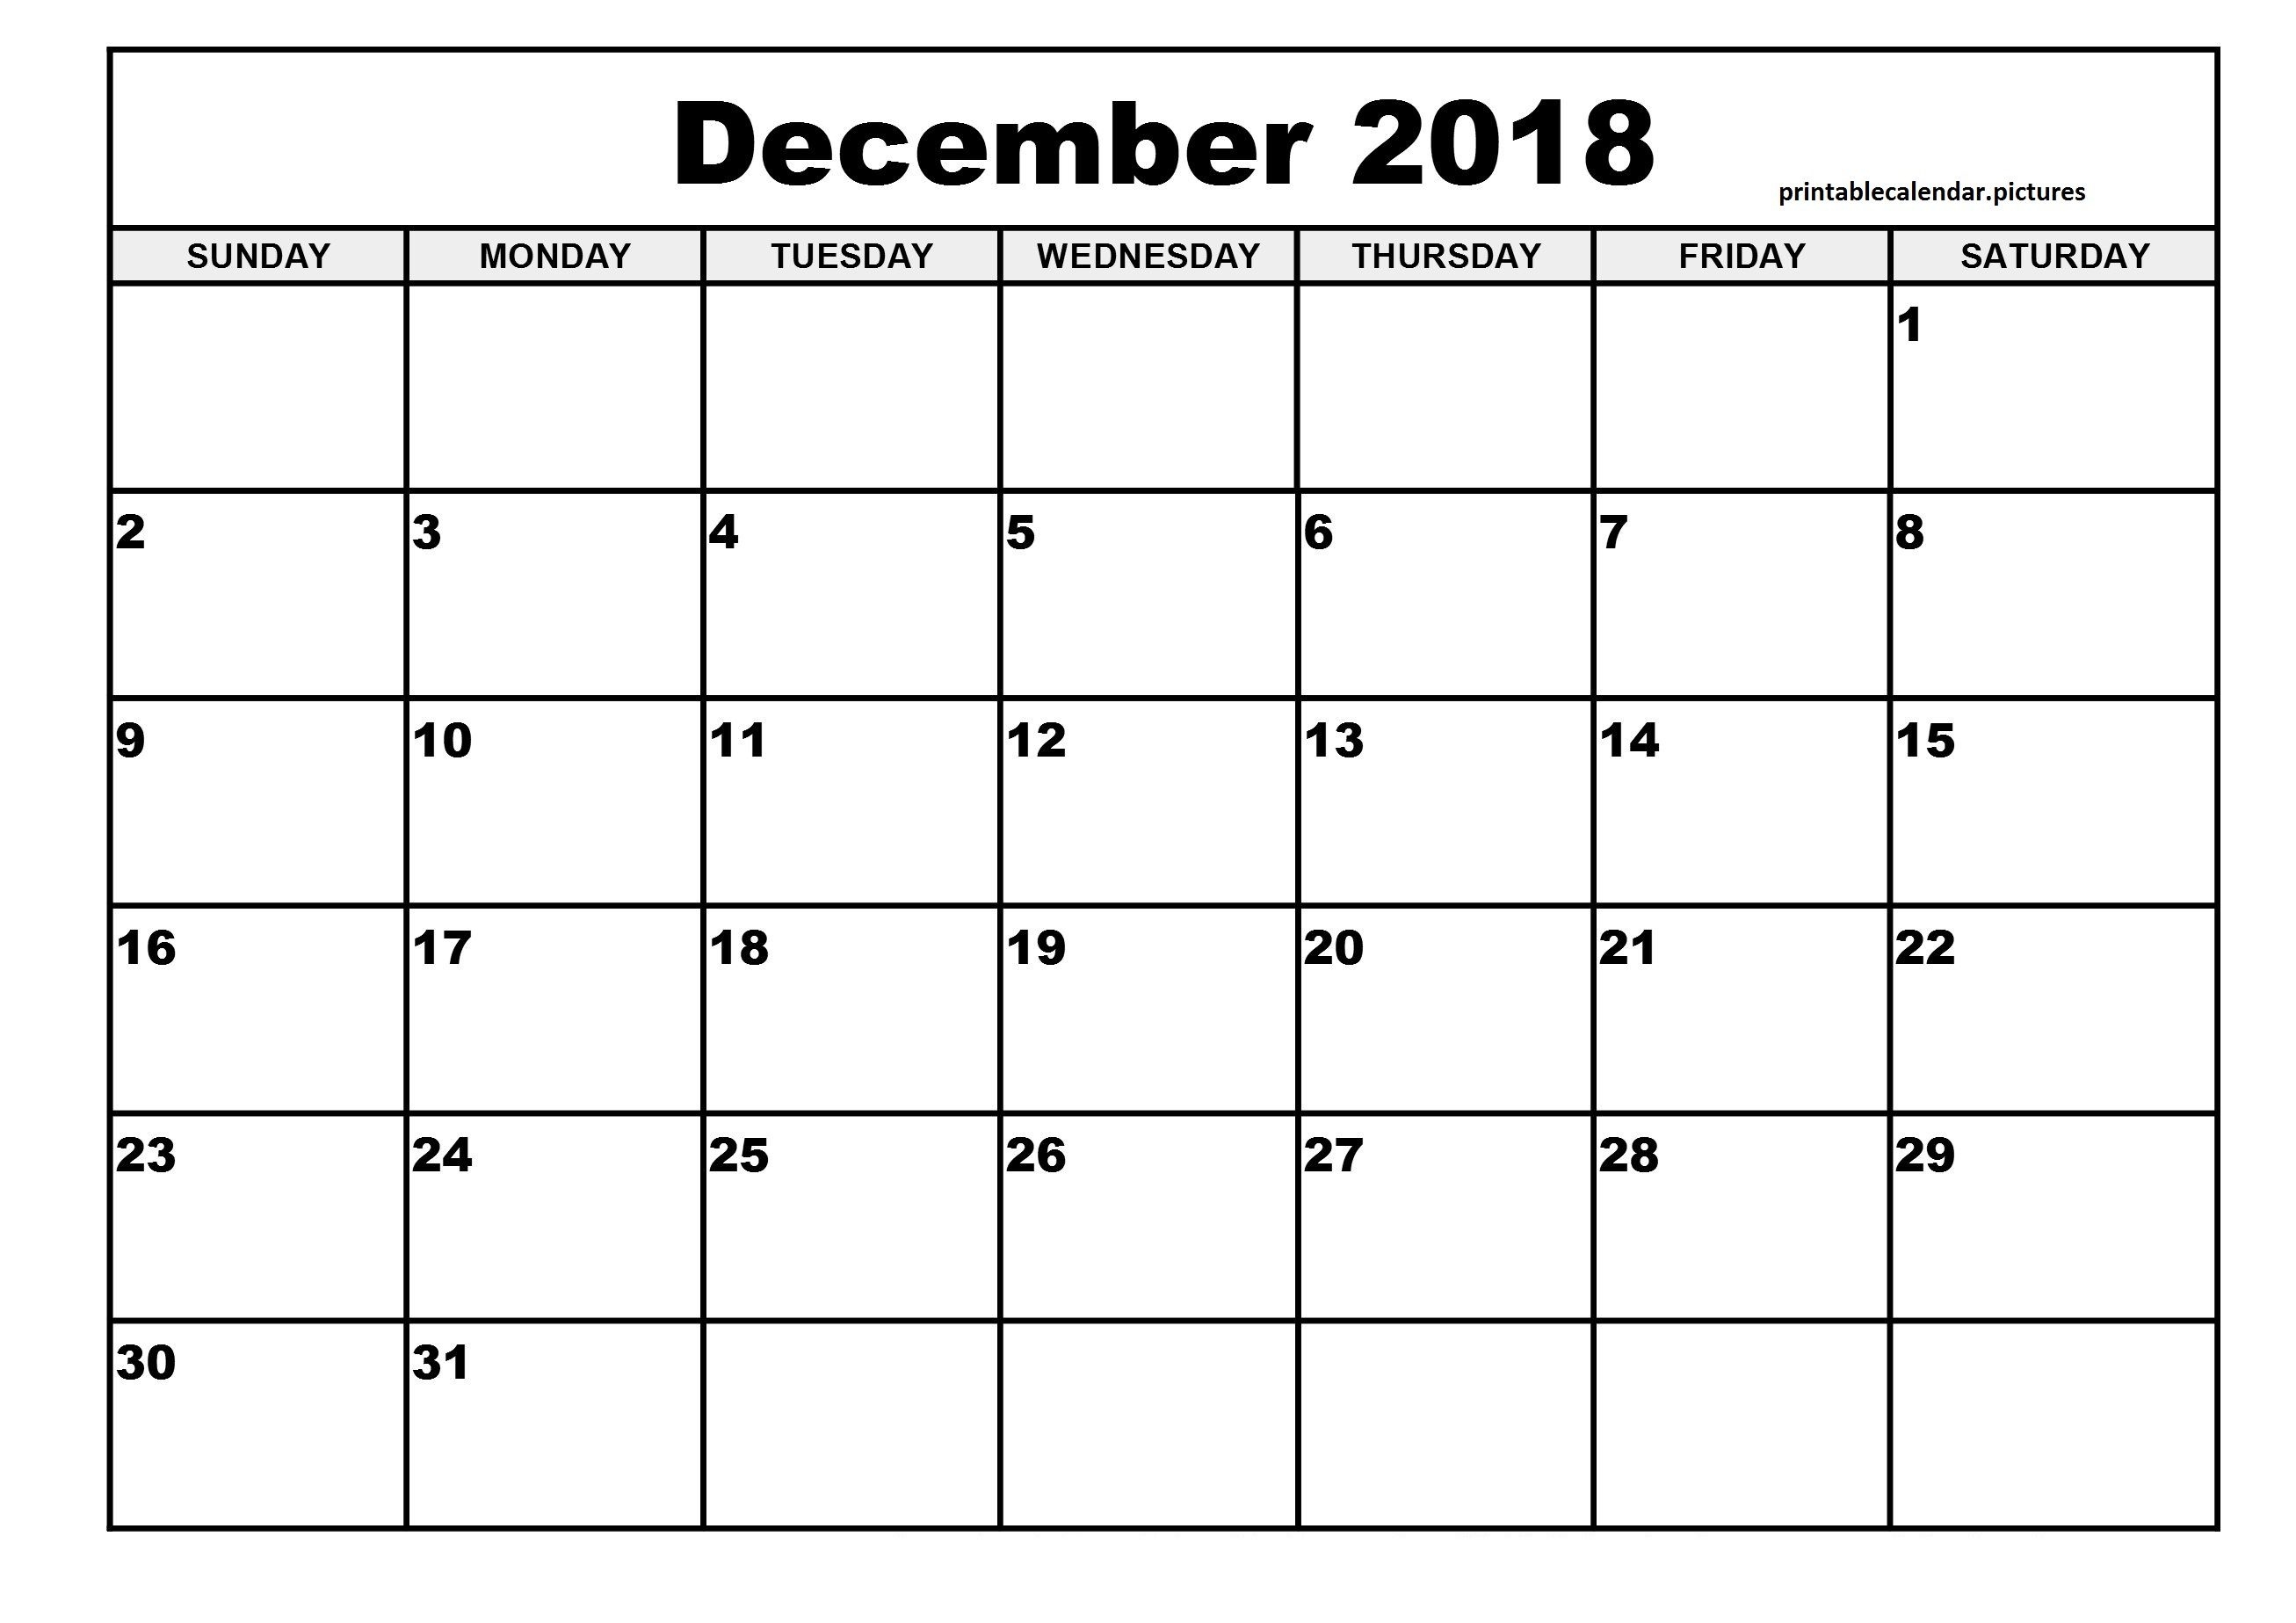 December Calendar 2018 Printable Black And White | Free Calendar Printable Black And White